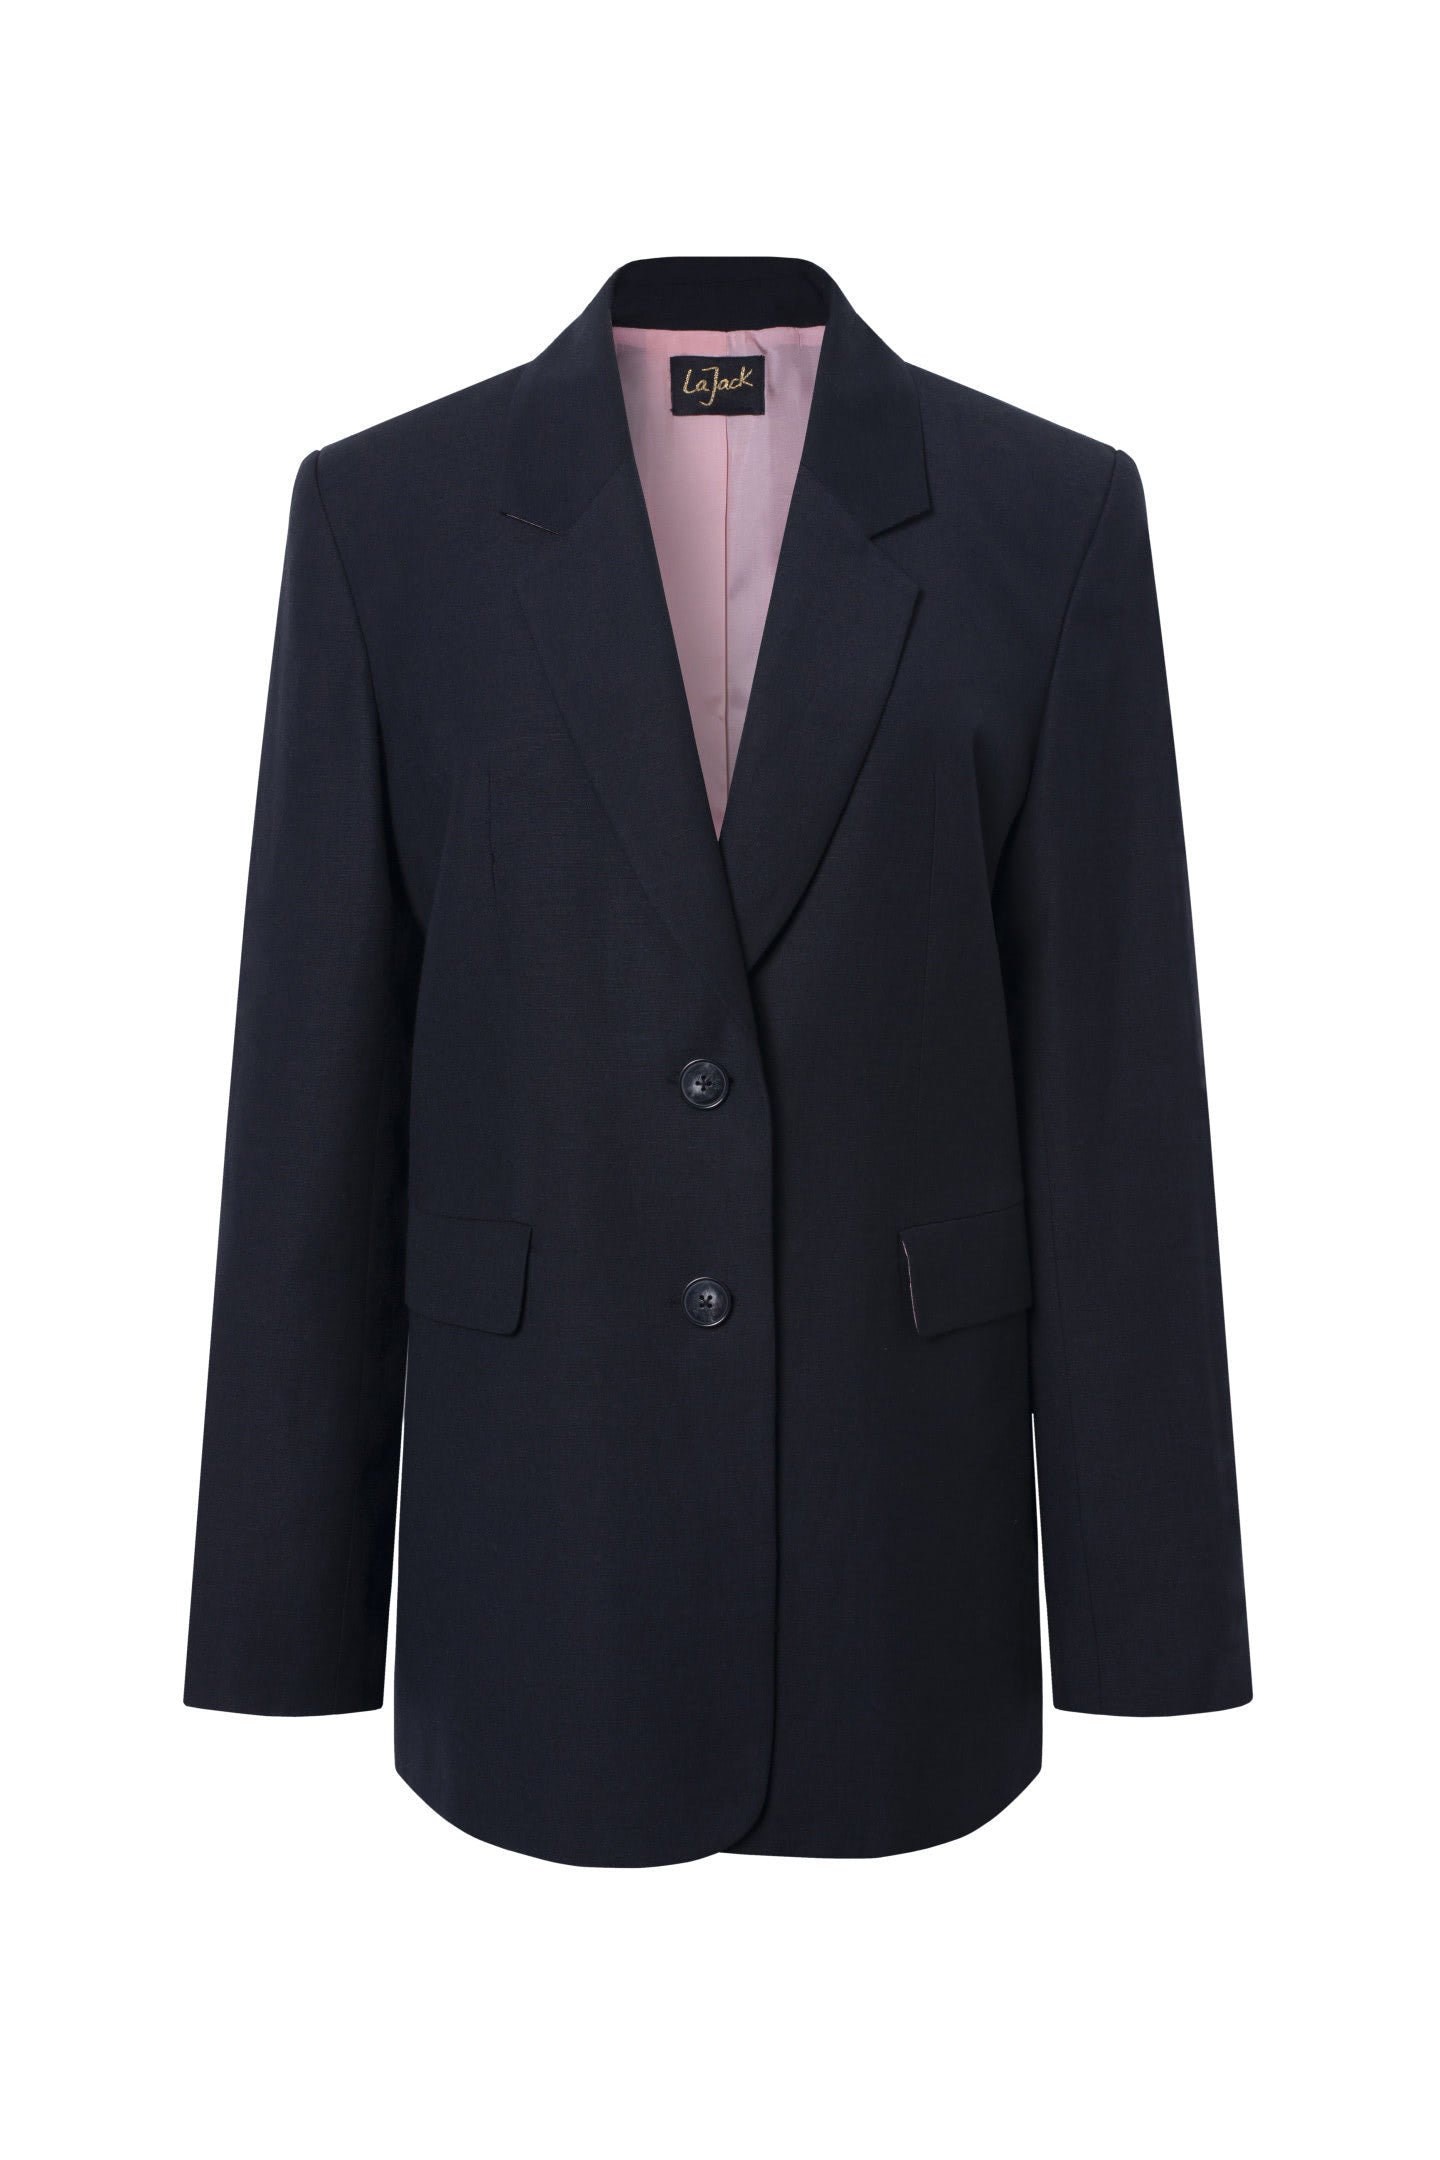 La Jackie - Oversized Black Summer Wool Blazer Jacket Pink or Star Lining 